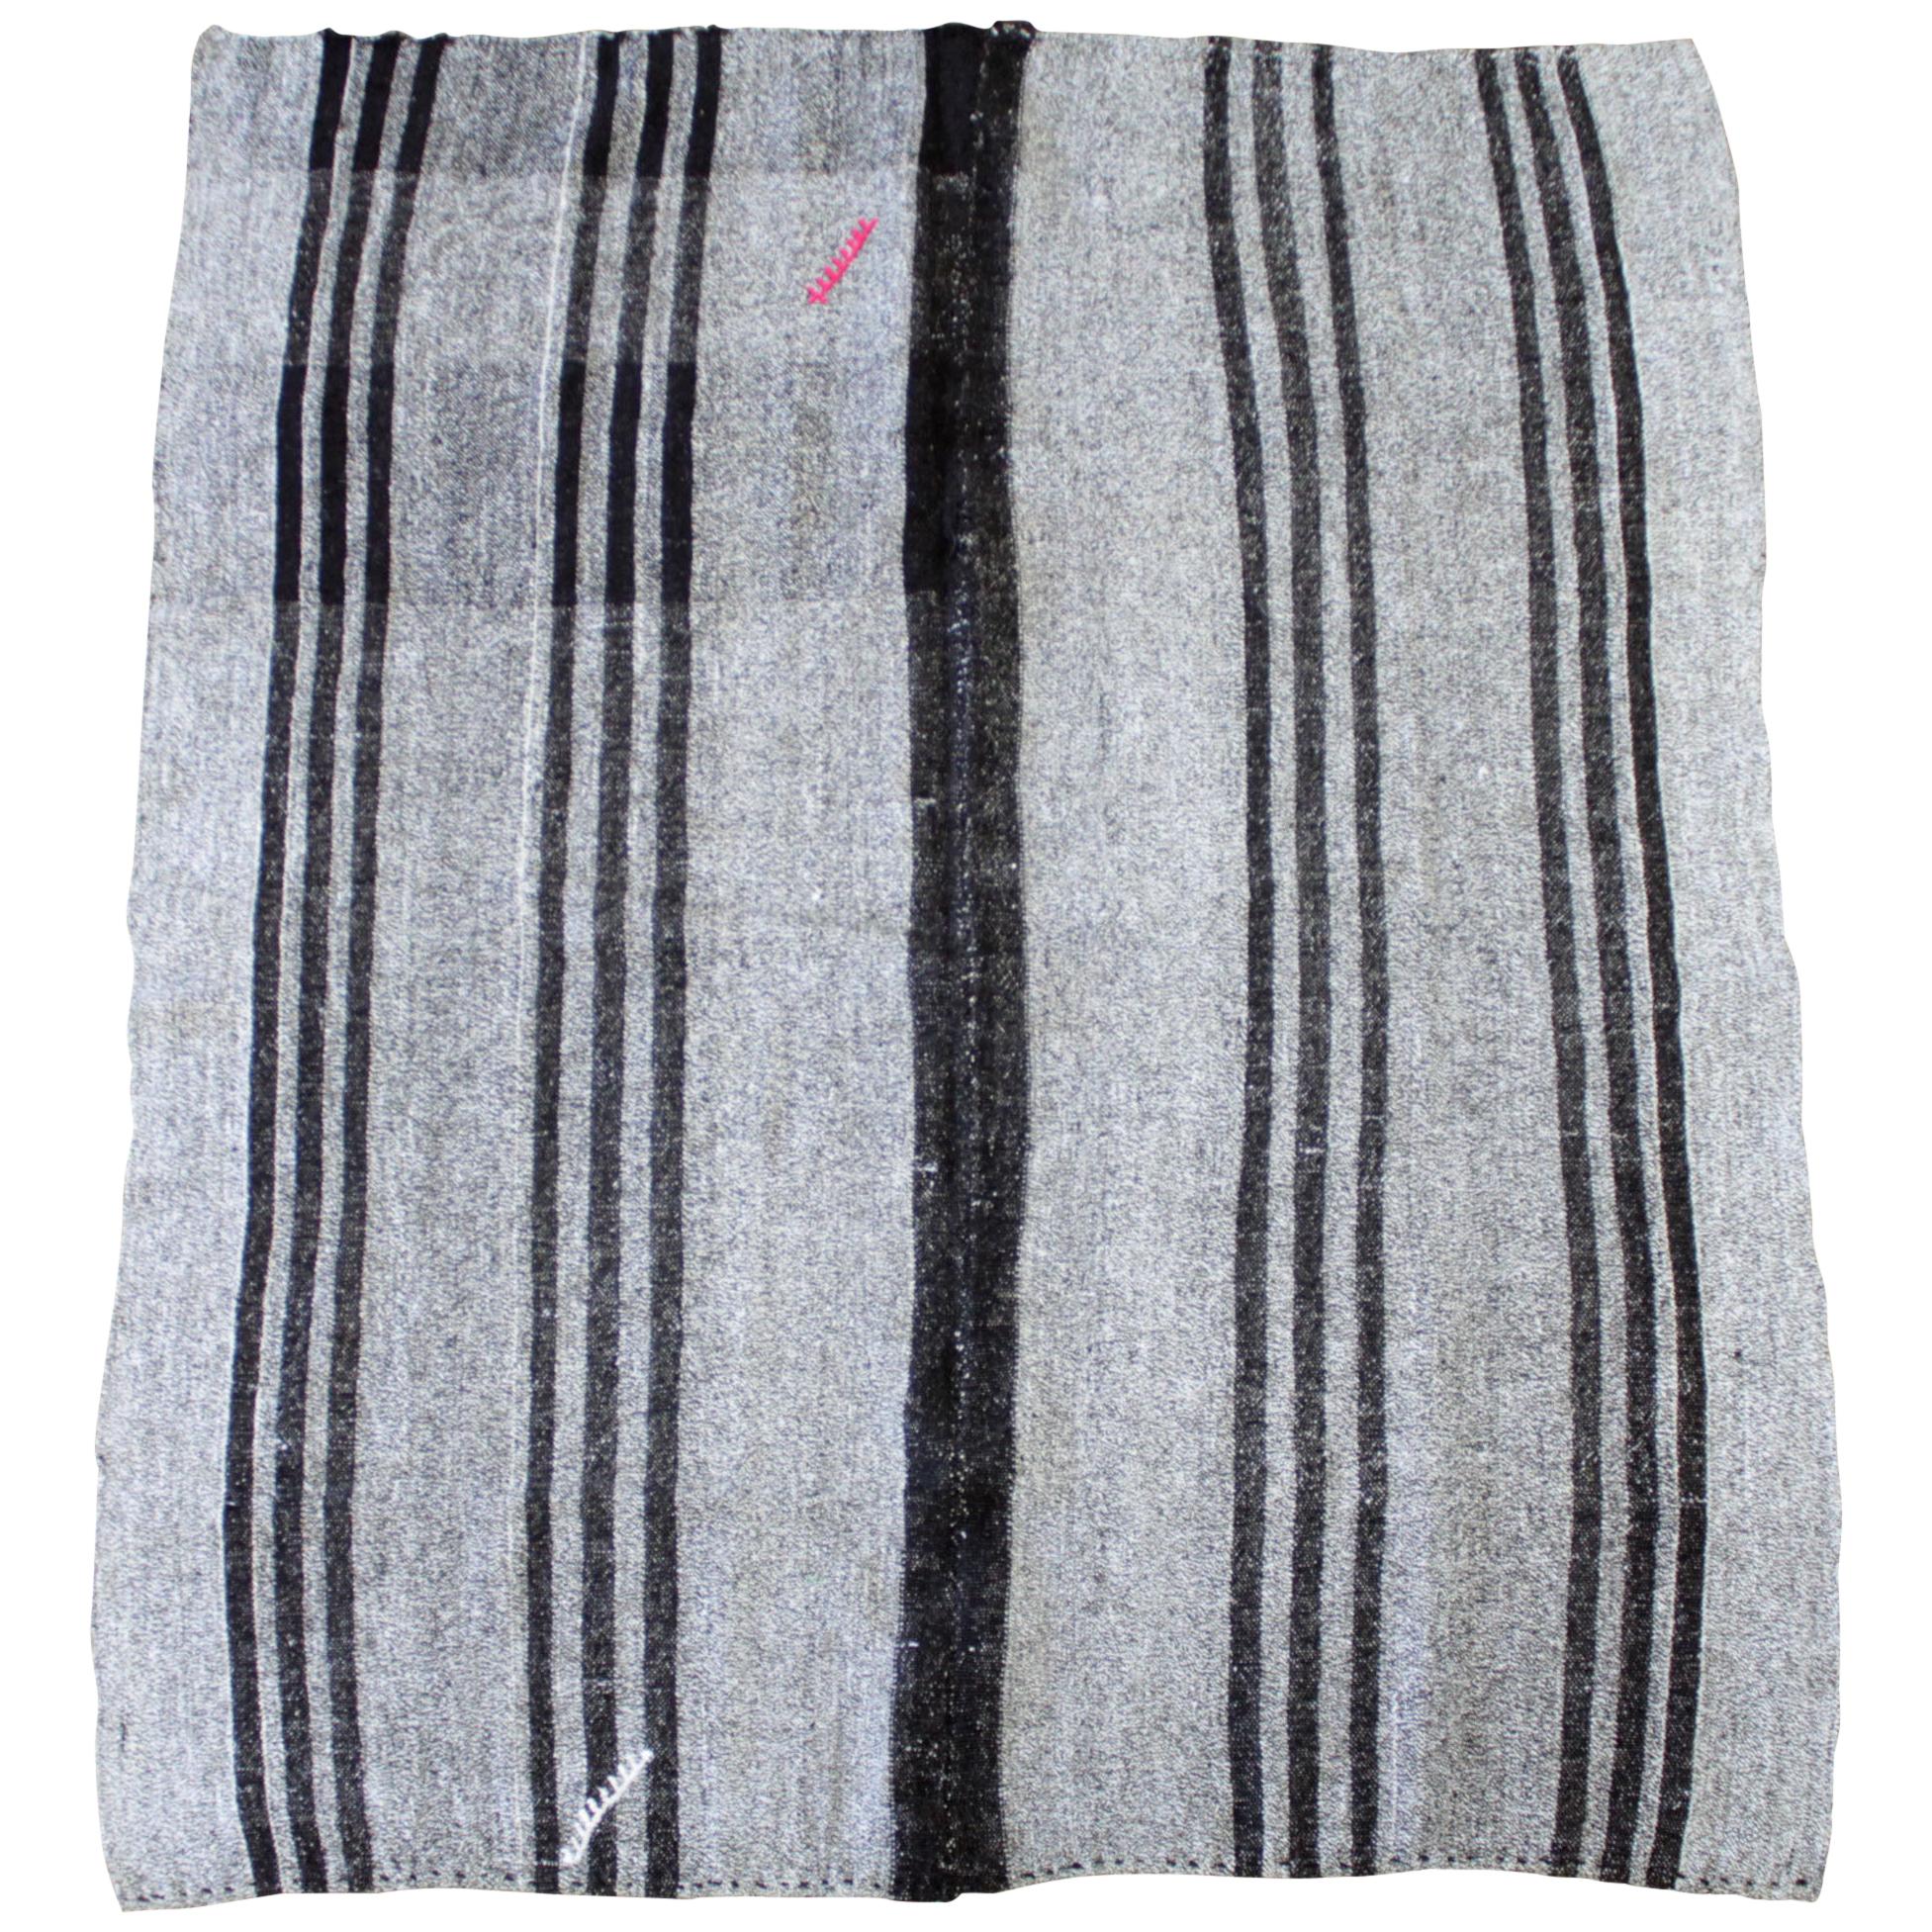 Vintage Turkish Flat-Weave Teresa Rug Gray and Brown Stripes